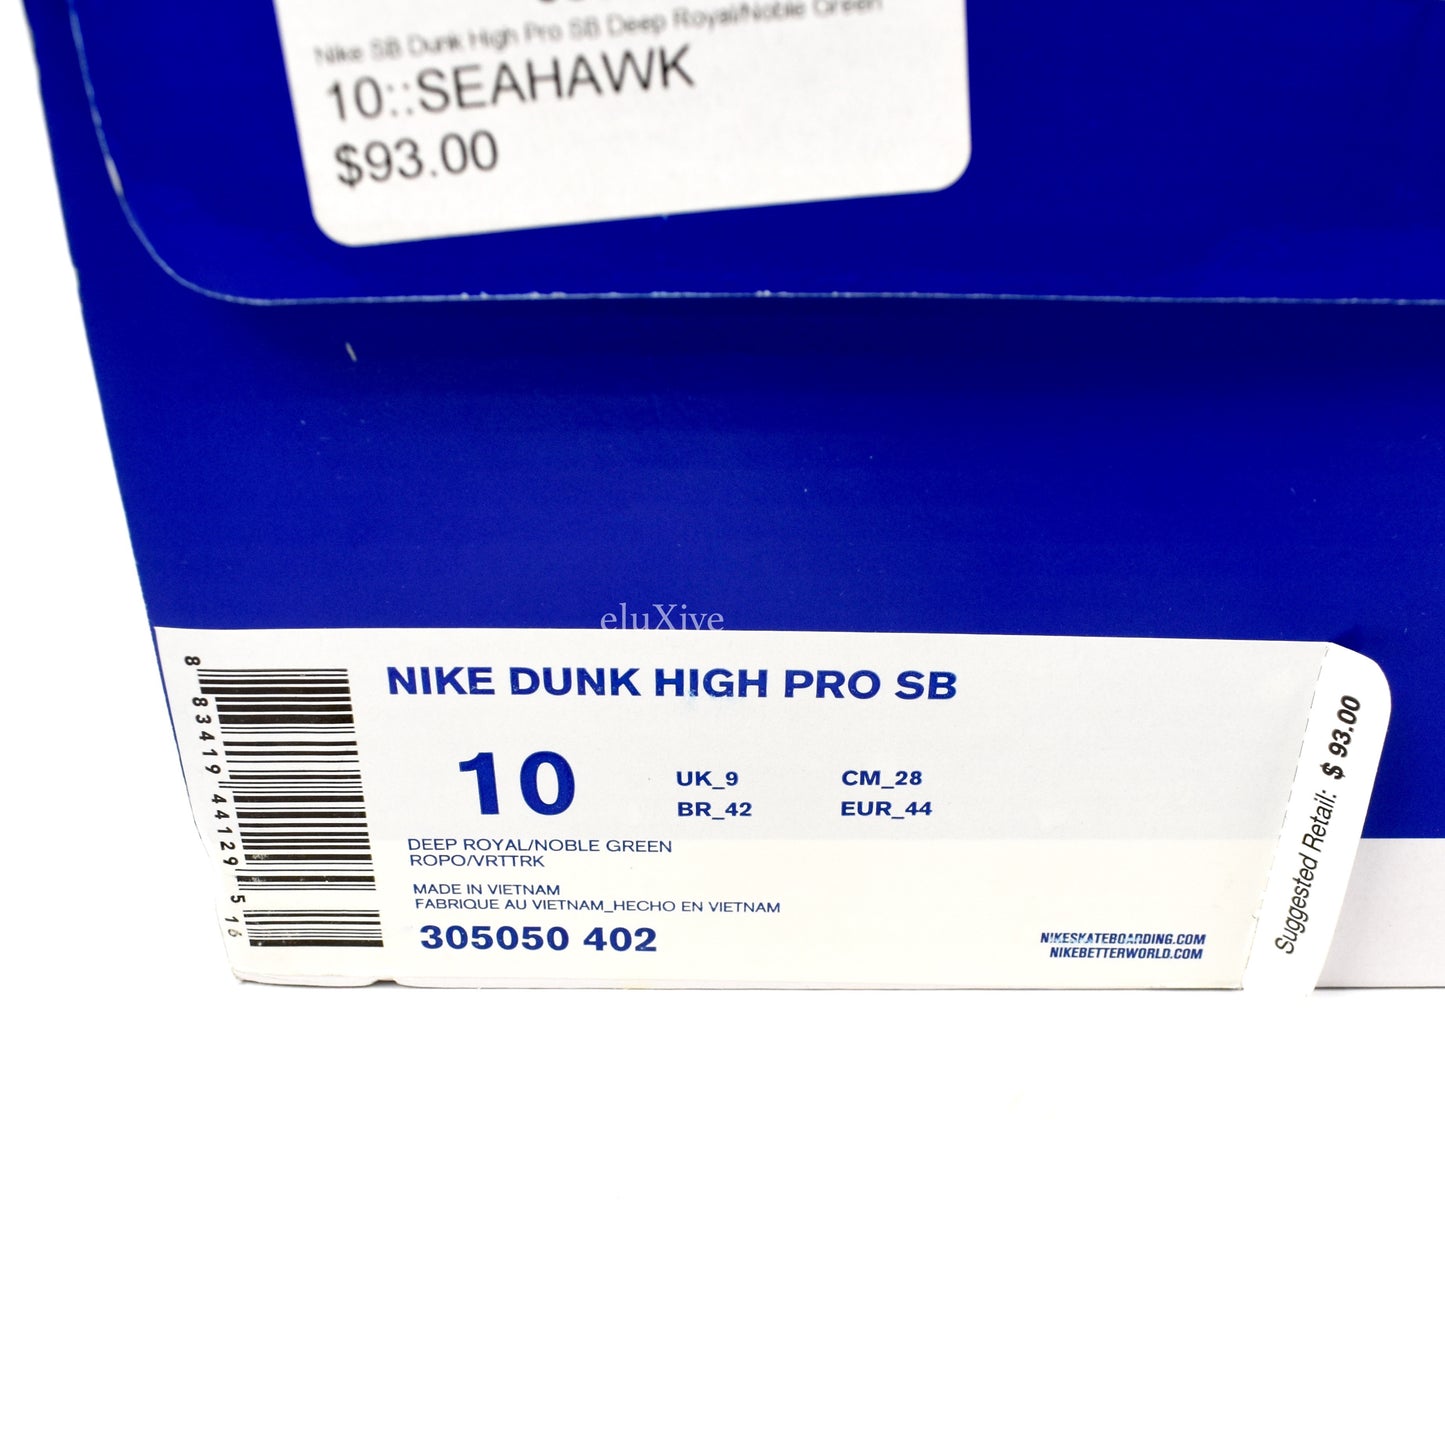 Nike - Dunk High Pro SB 'Seahawk'